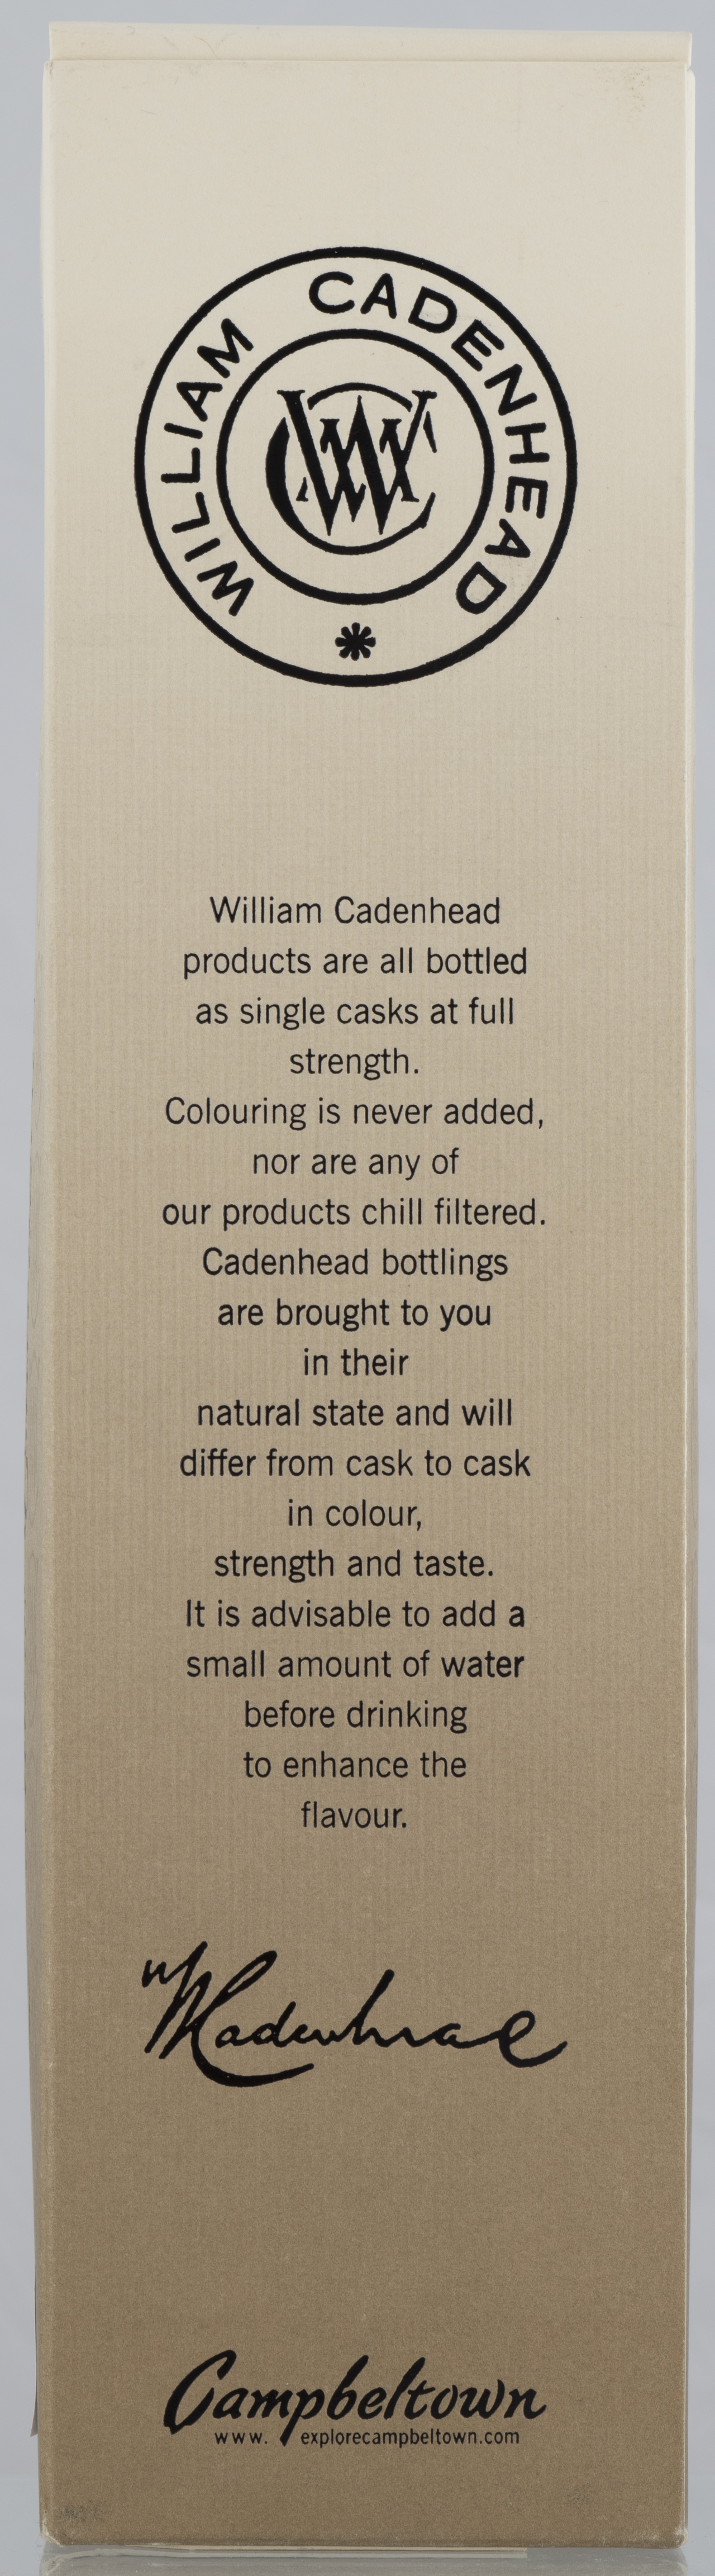 Billede: PHC_7265 - Cadenhead Wine Cask 10 year Ardmore - box back.jpg